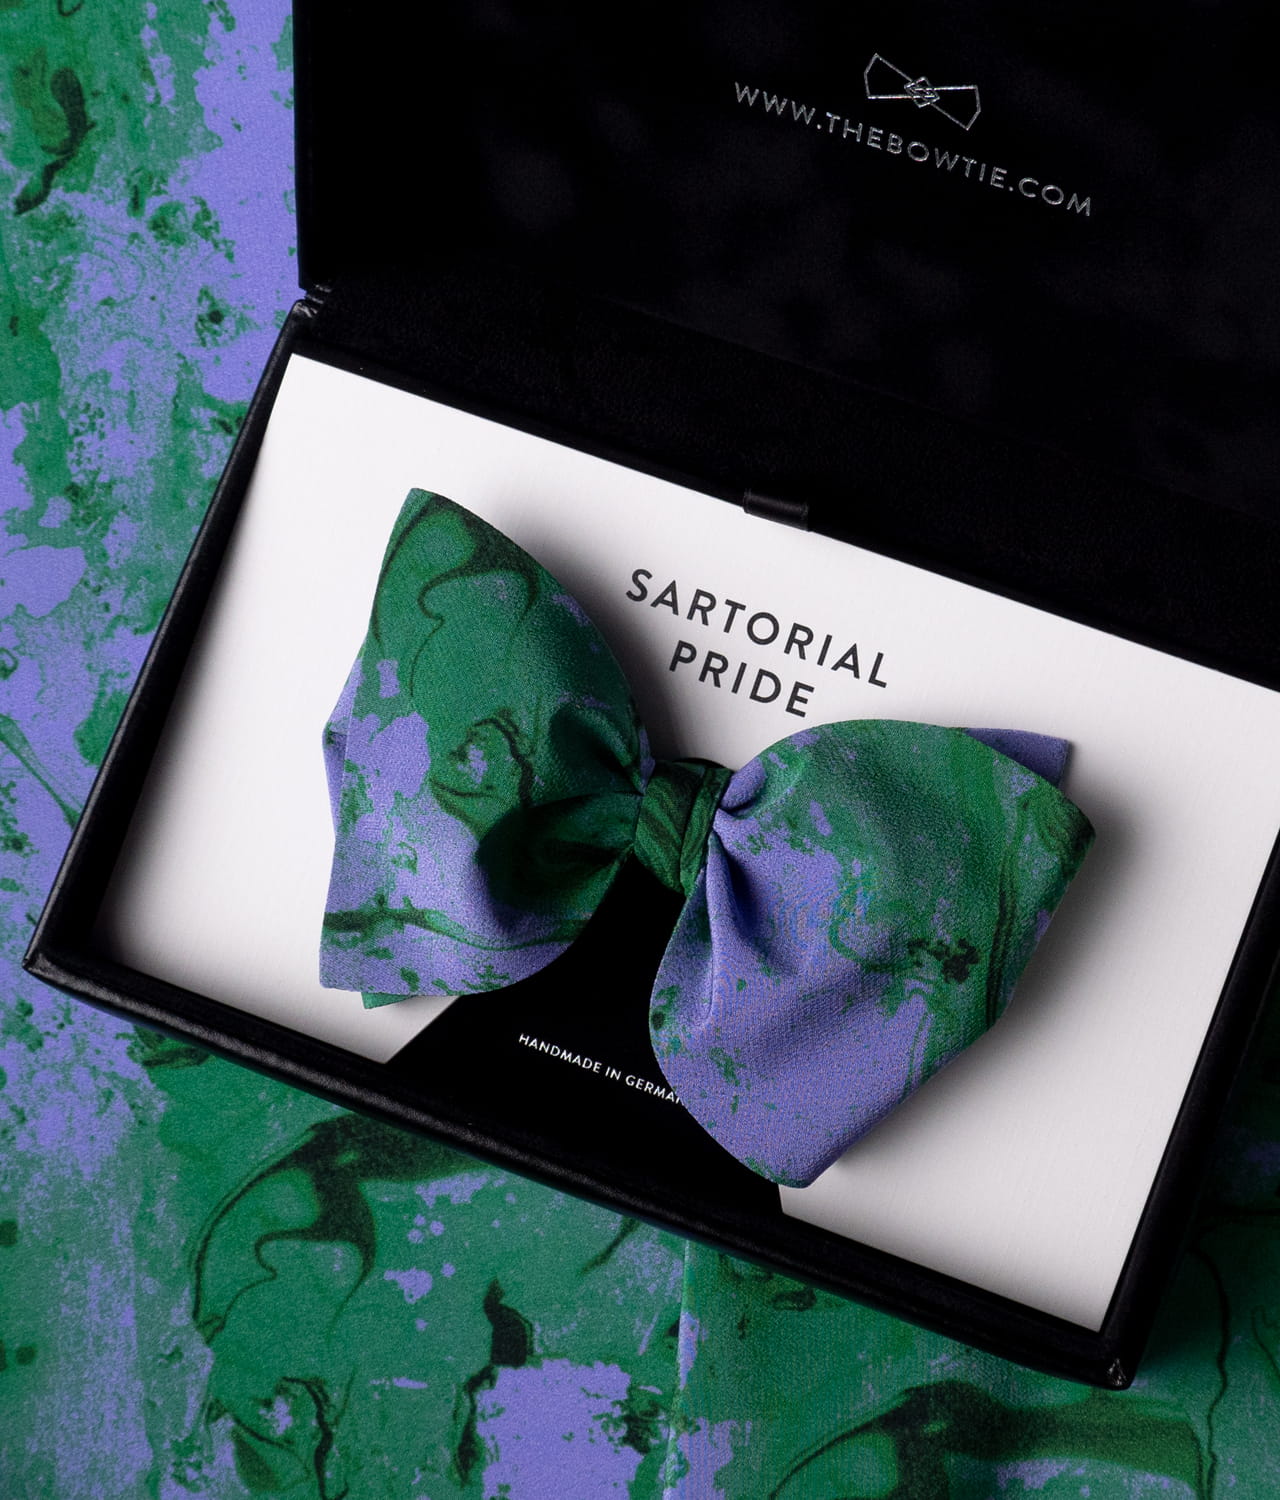 Purple / Green Marble Pattern Design - 100% Silk - Bow Tie - HNL5